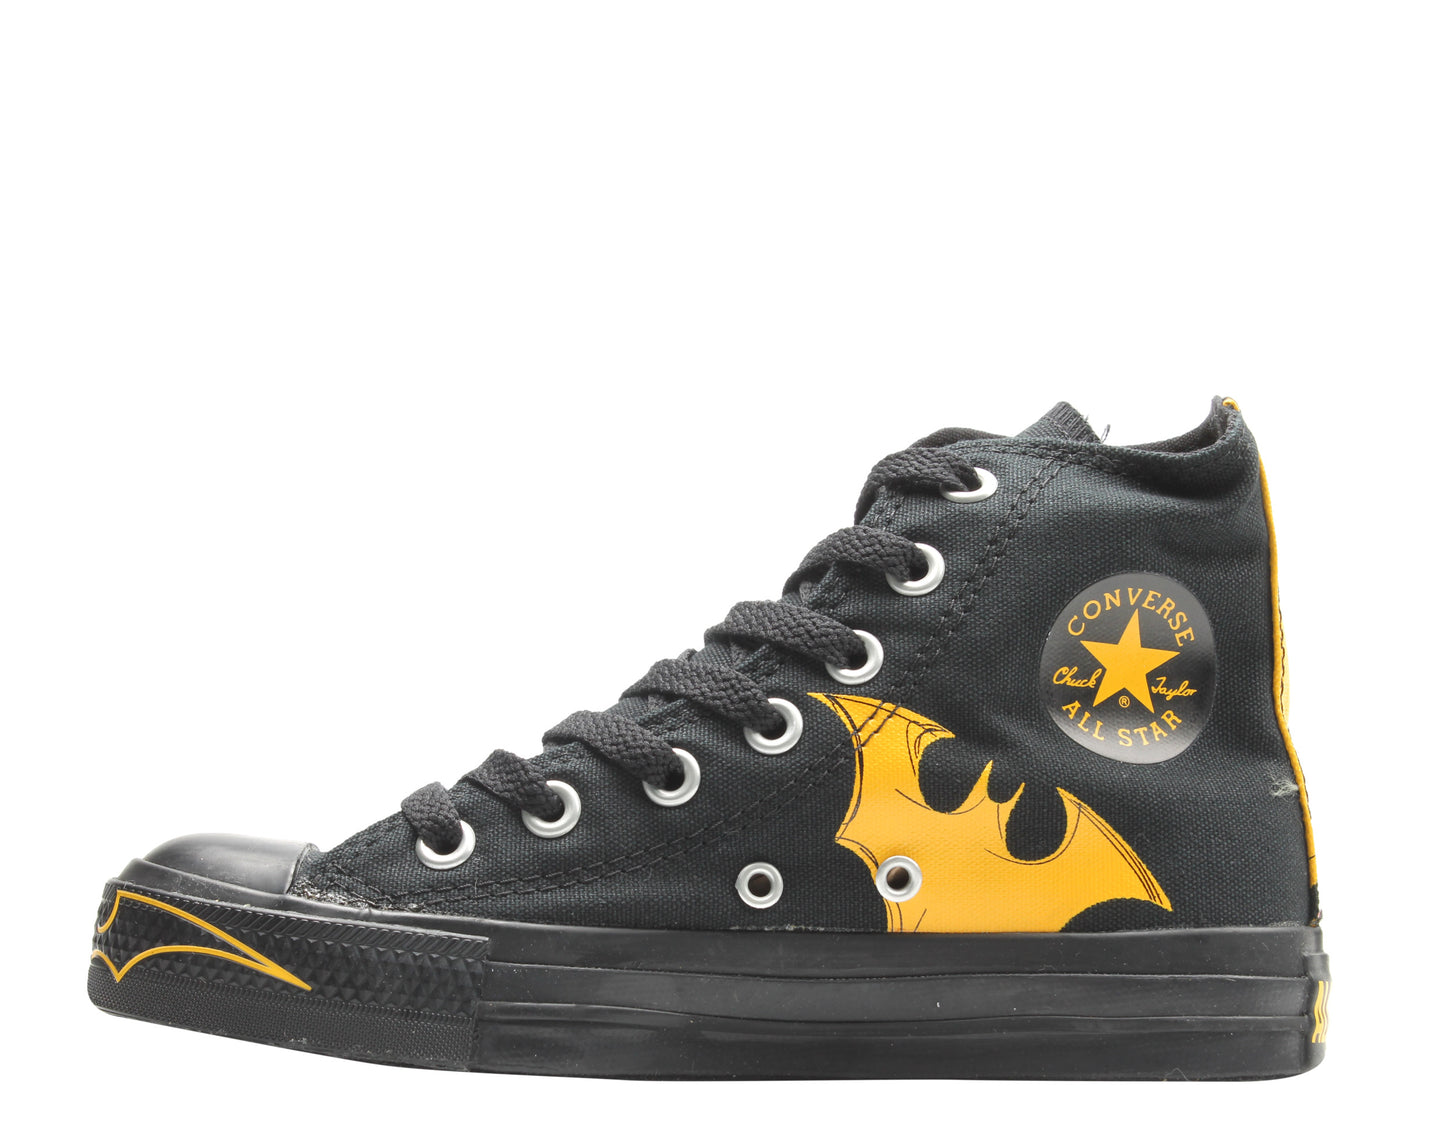 Converse Chuck Taylor All Star Print Batman Black/Yellow High Top Sneaker 1U594